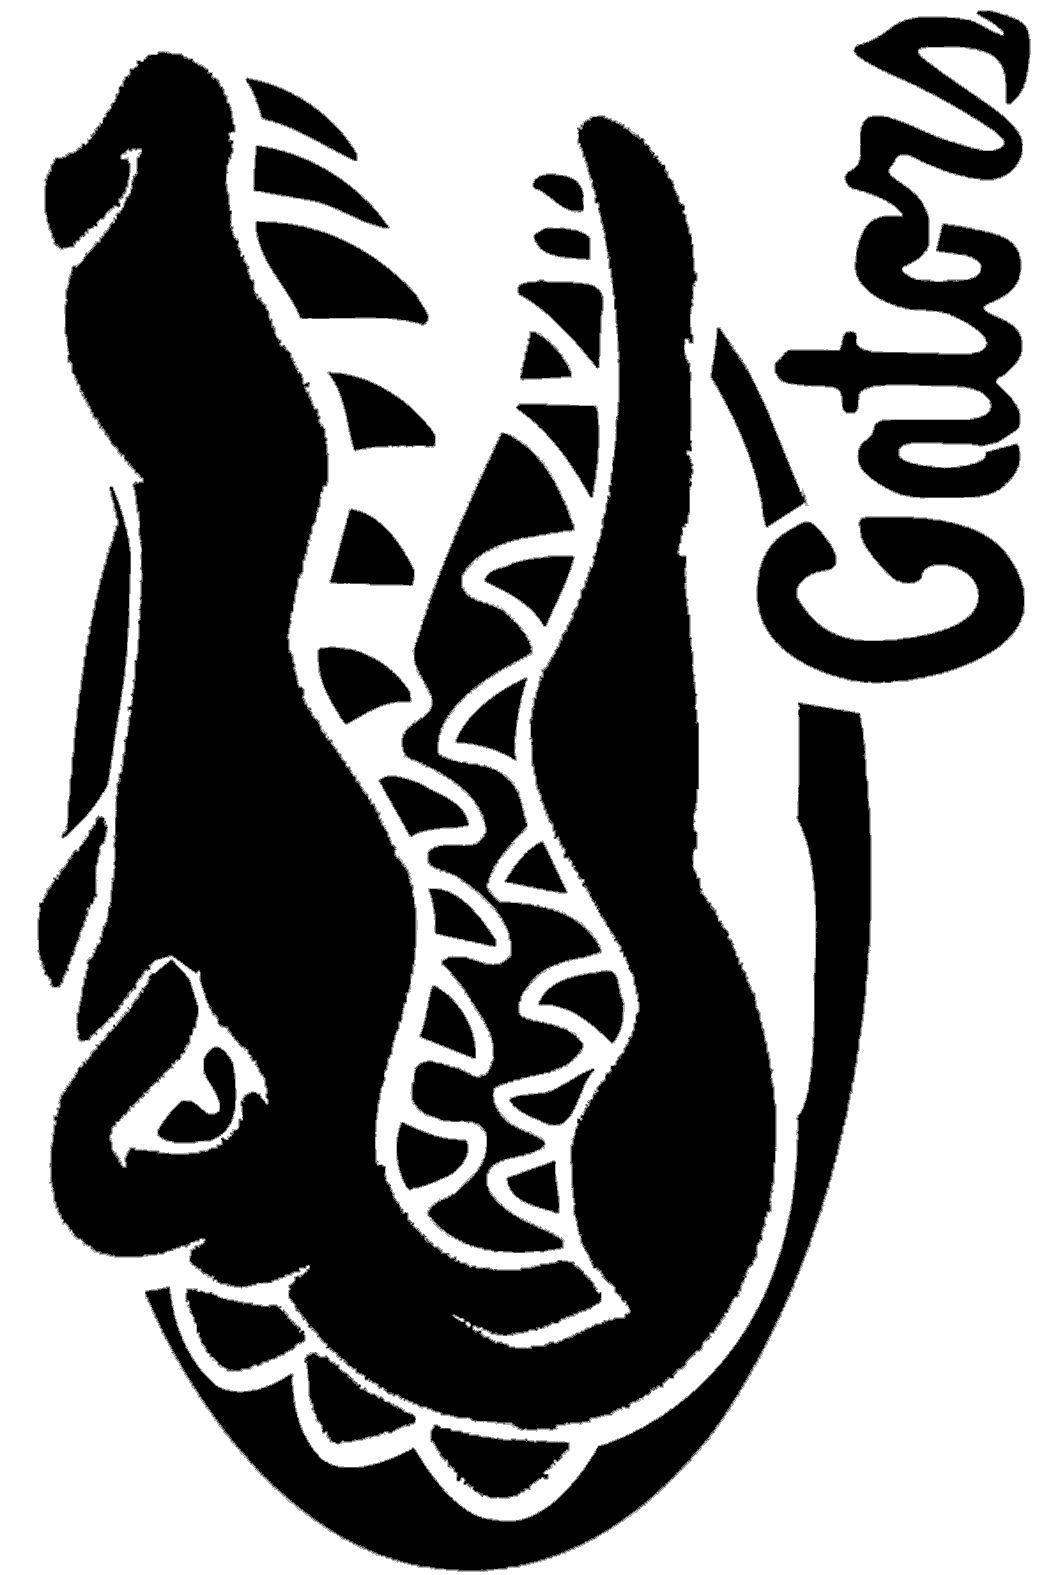 FL Gators Logo - Pattern To Make Your Pumpkin A Florida Gator. Gator Ific Goodies